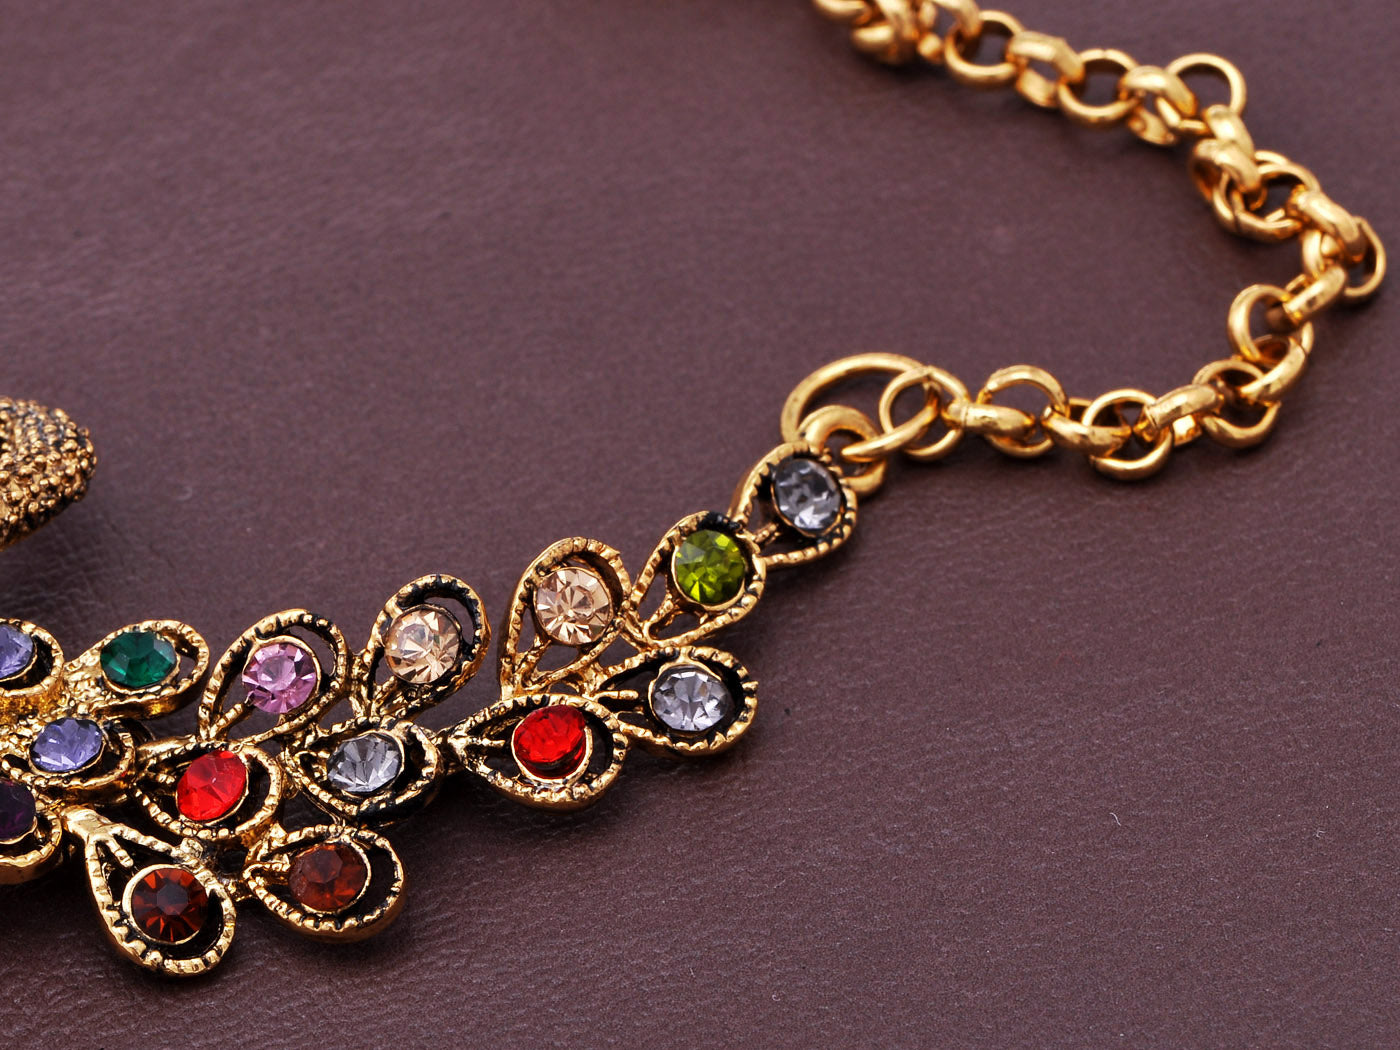 Ornate Multicolored Adorned Peacock Chain Necklace